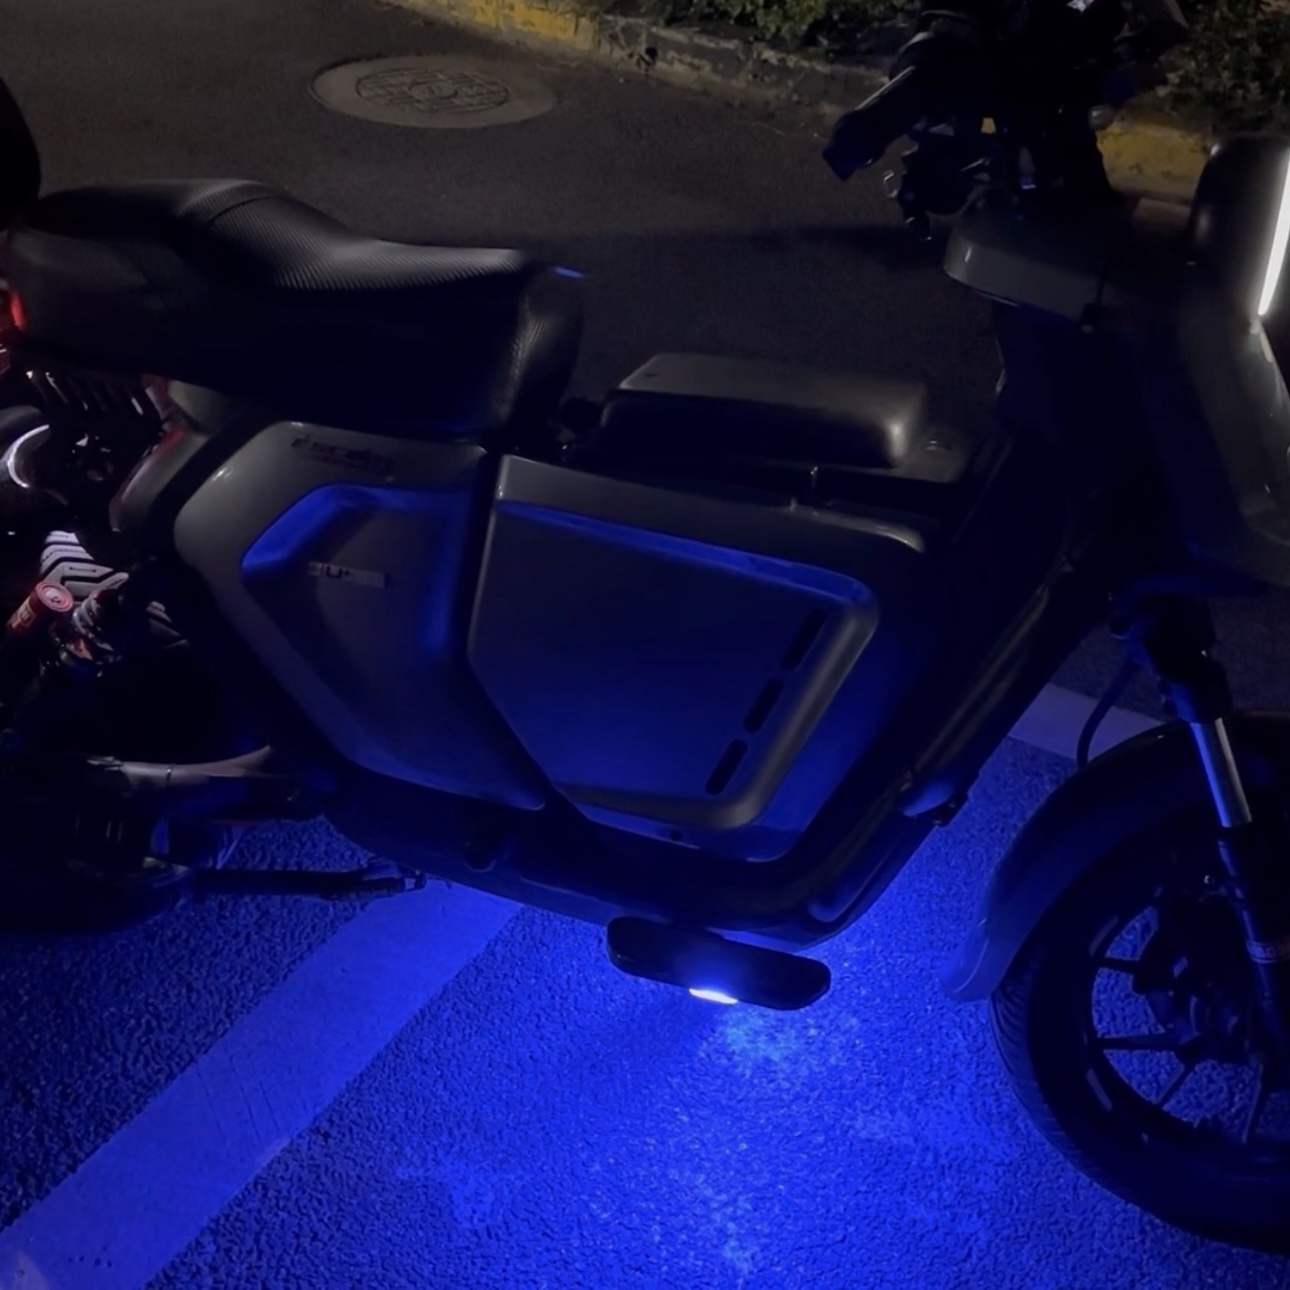 Scooter Remote Underglow Lowlights Set